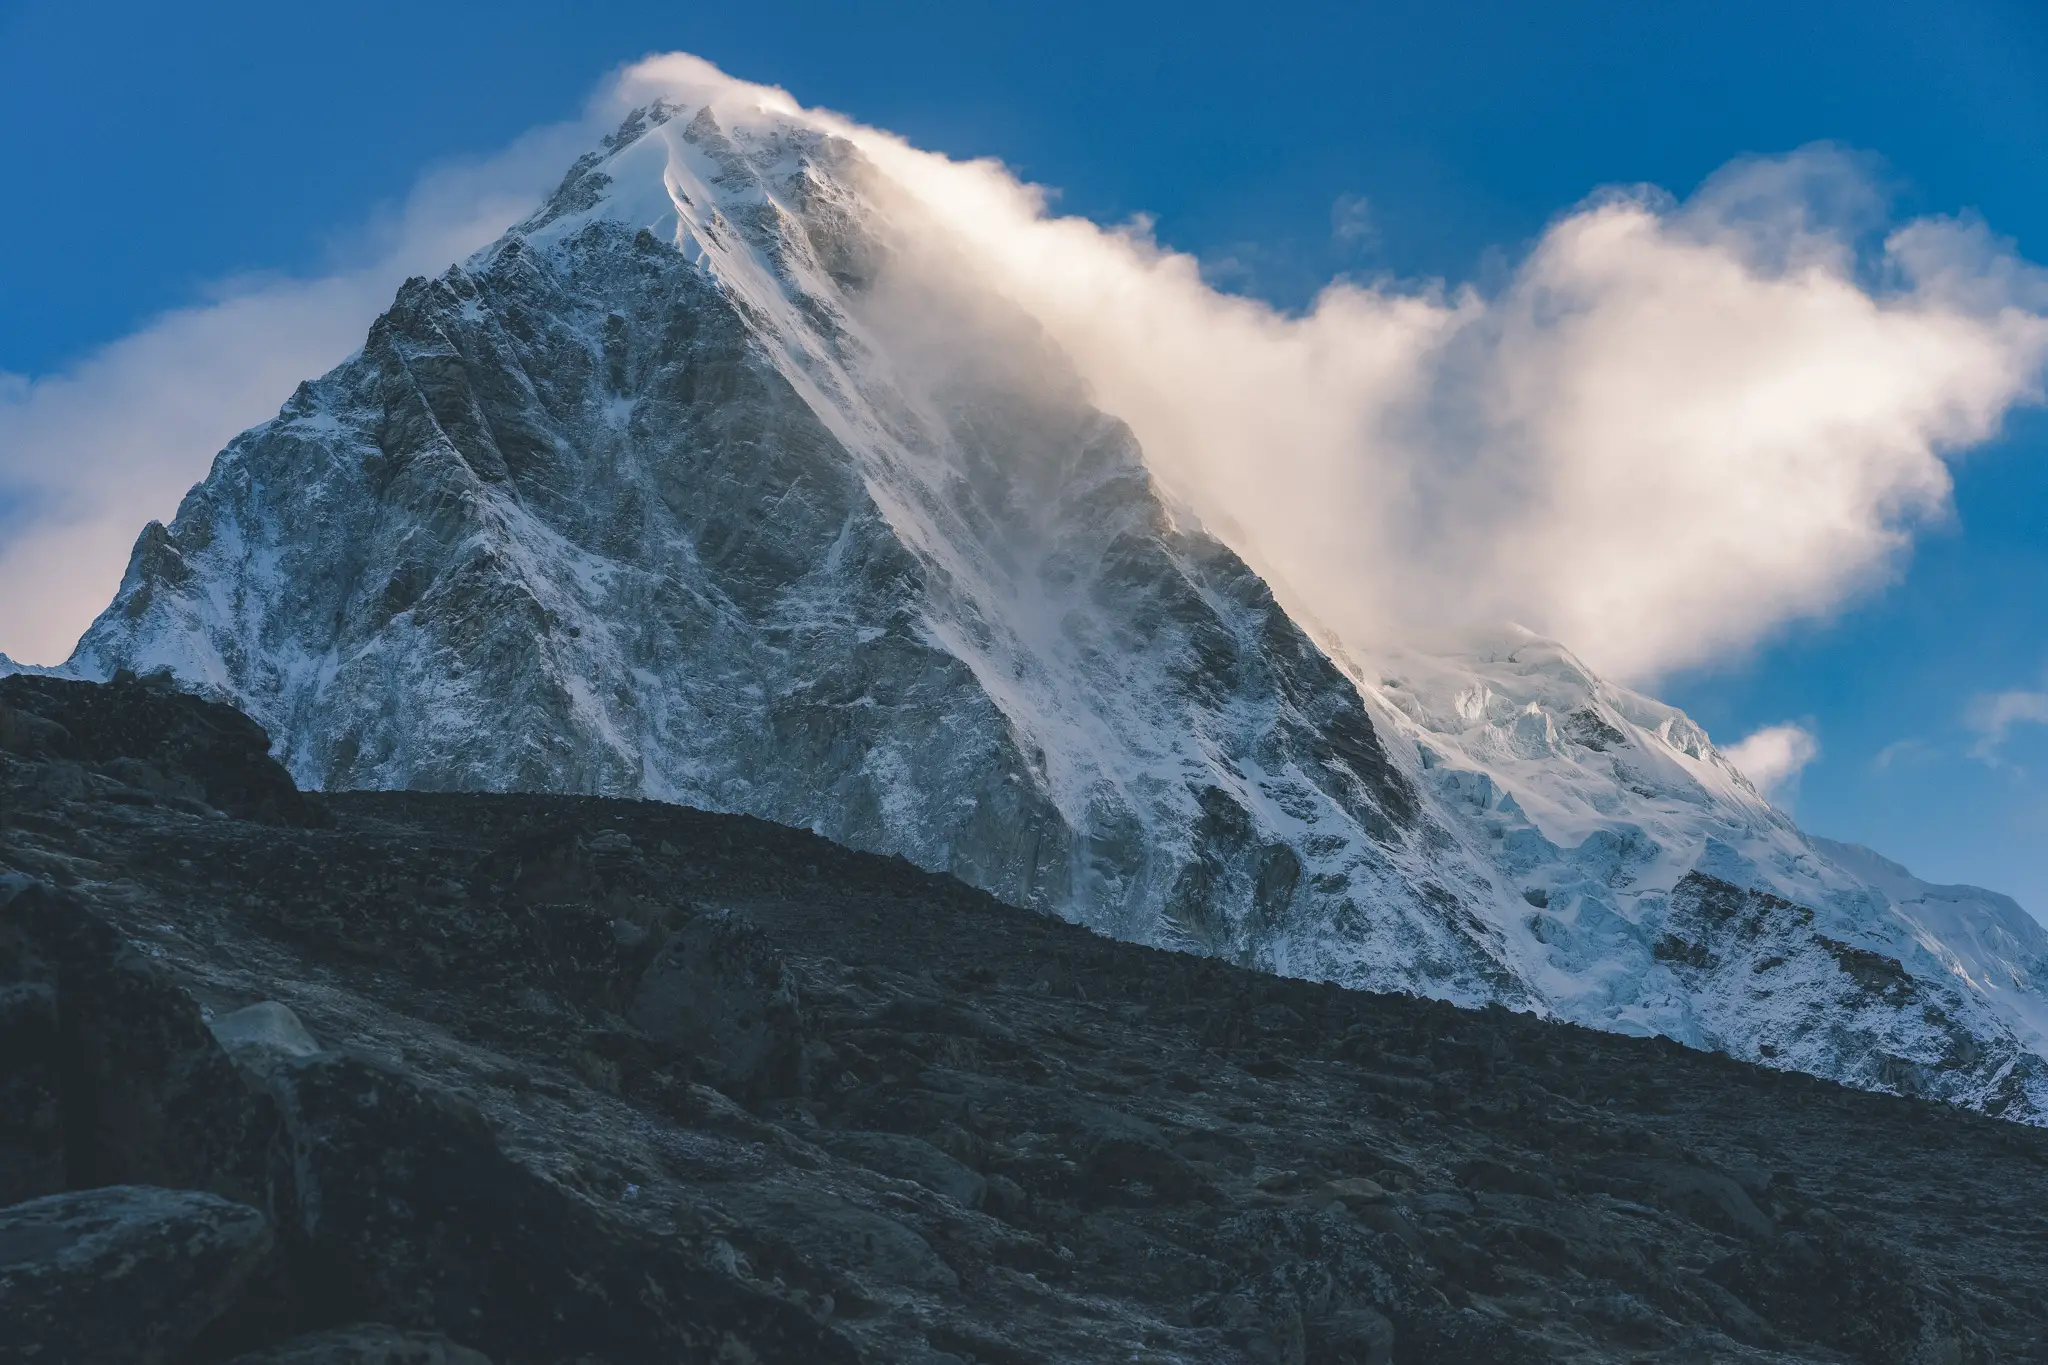 View of Pumori while ascending Kala Patthar (5,643 meters)